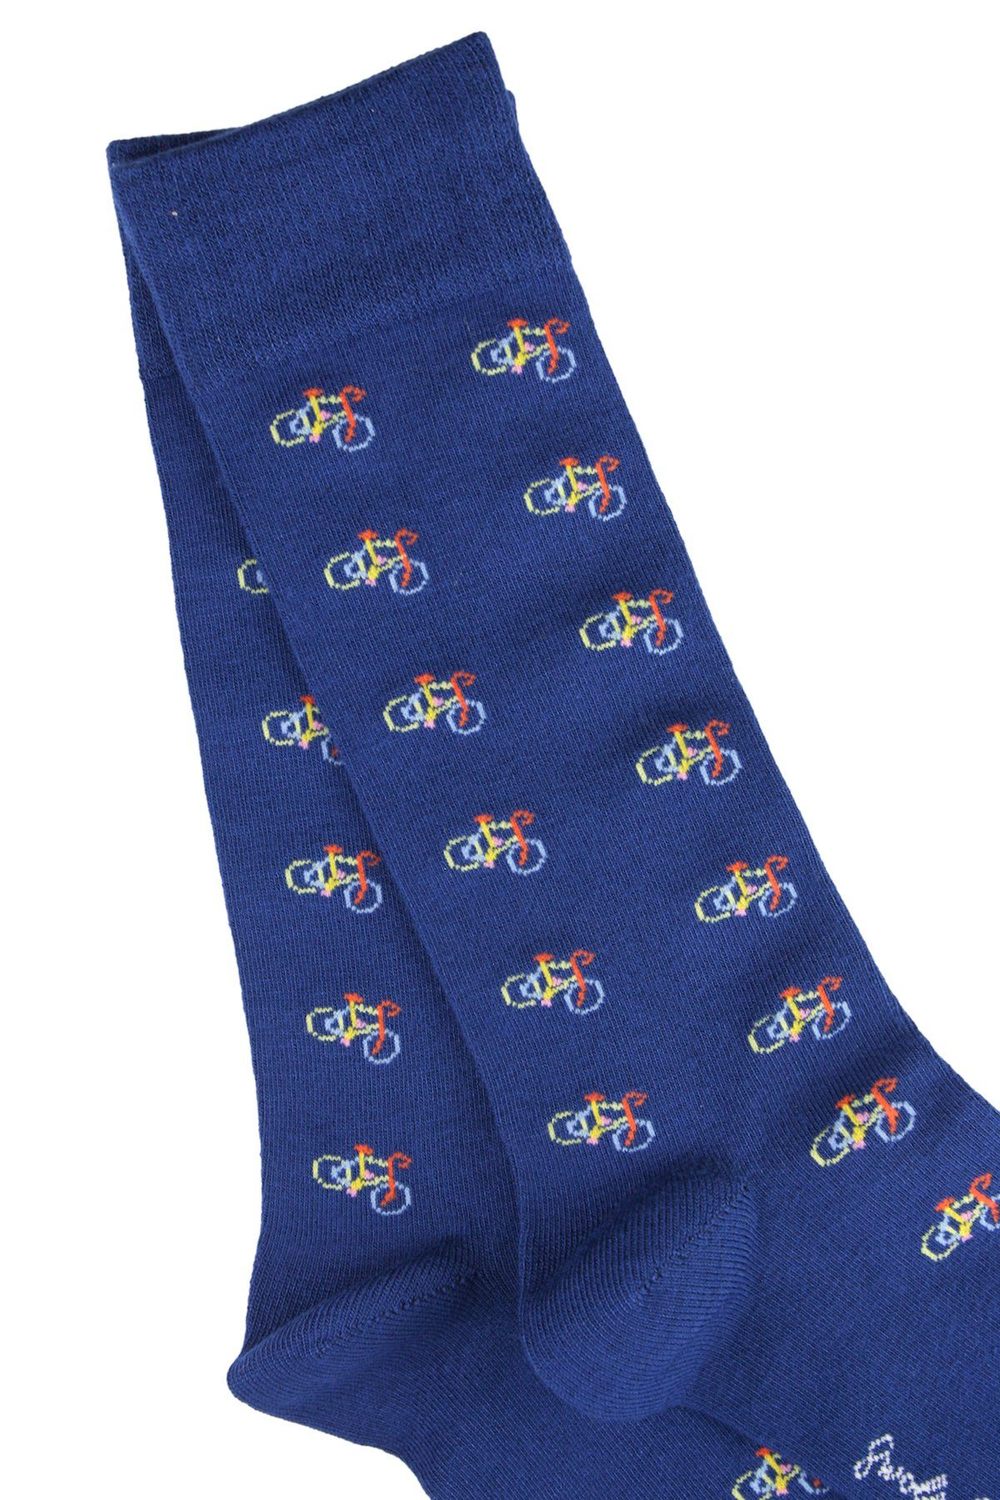 Blue Bicycle Bamboo Socks